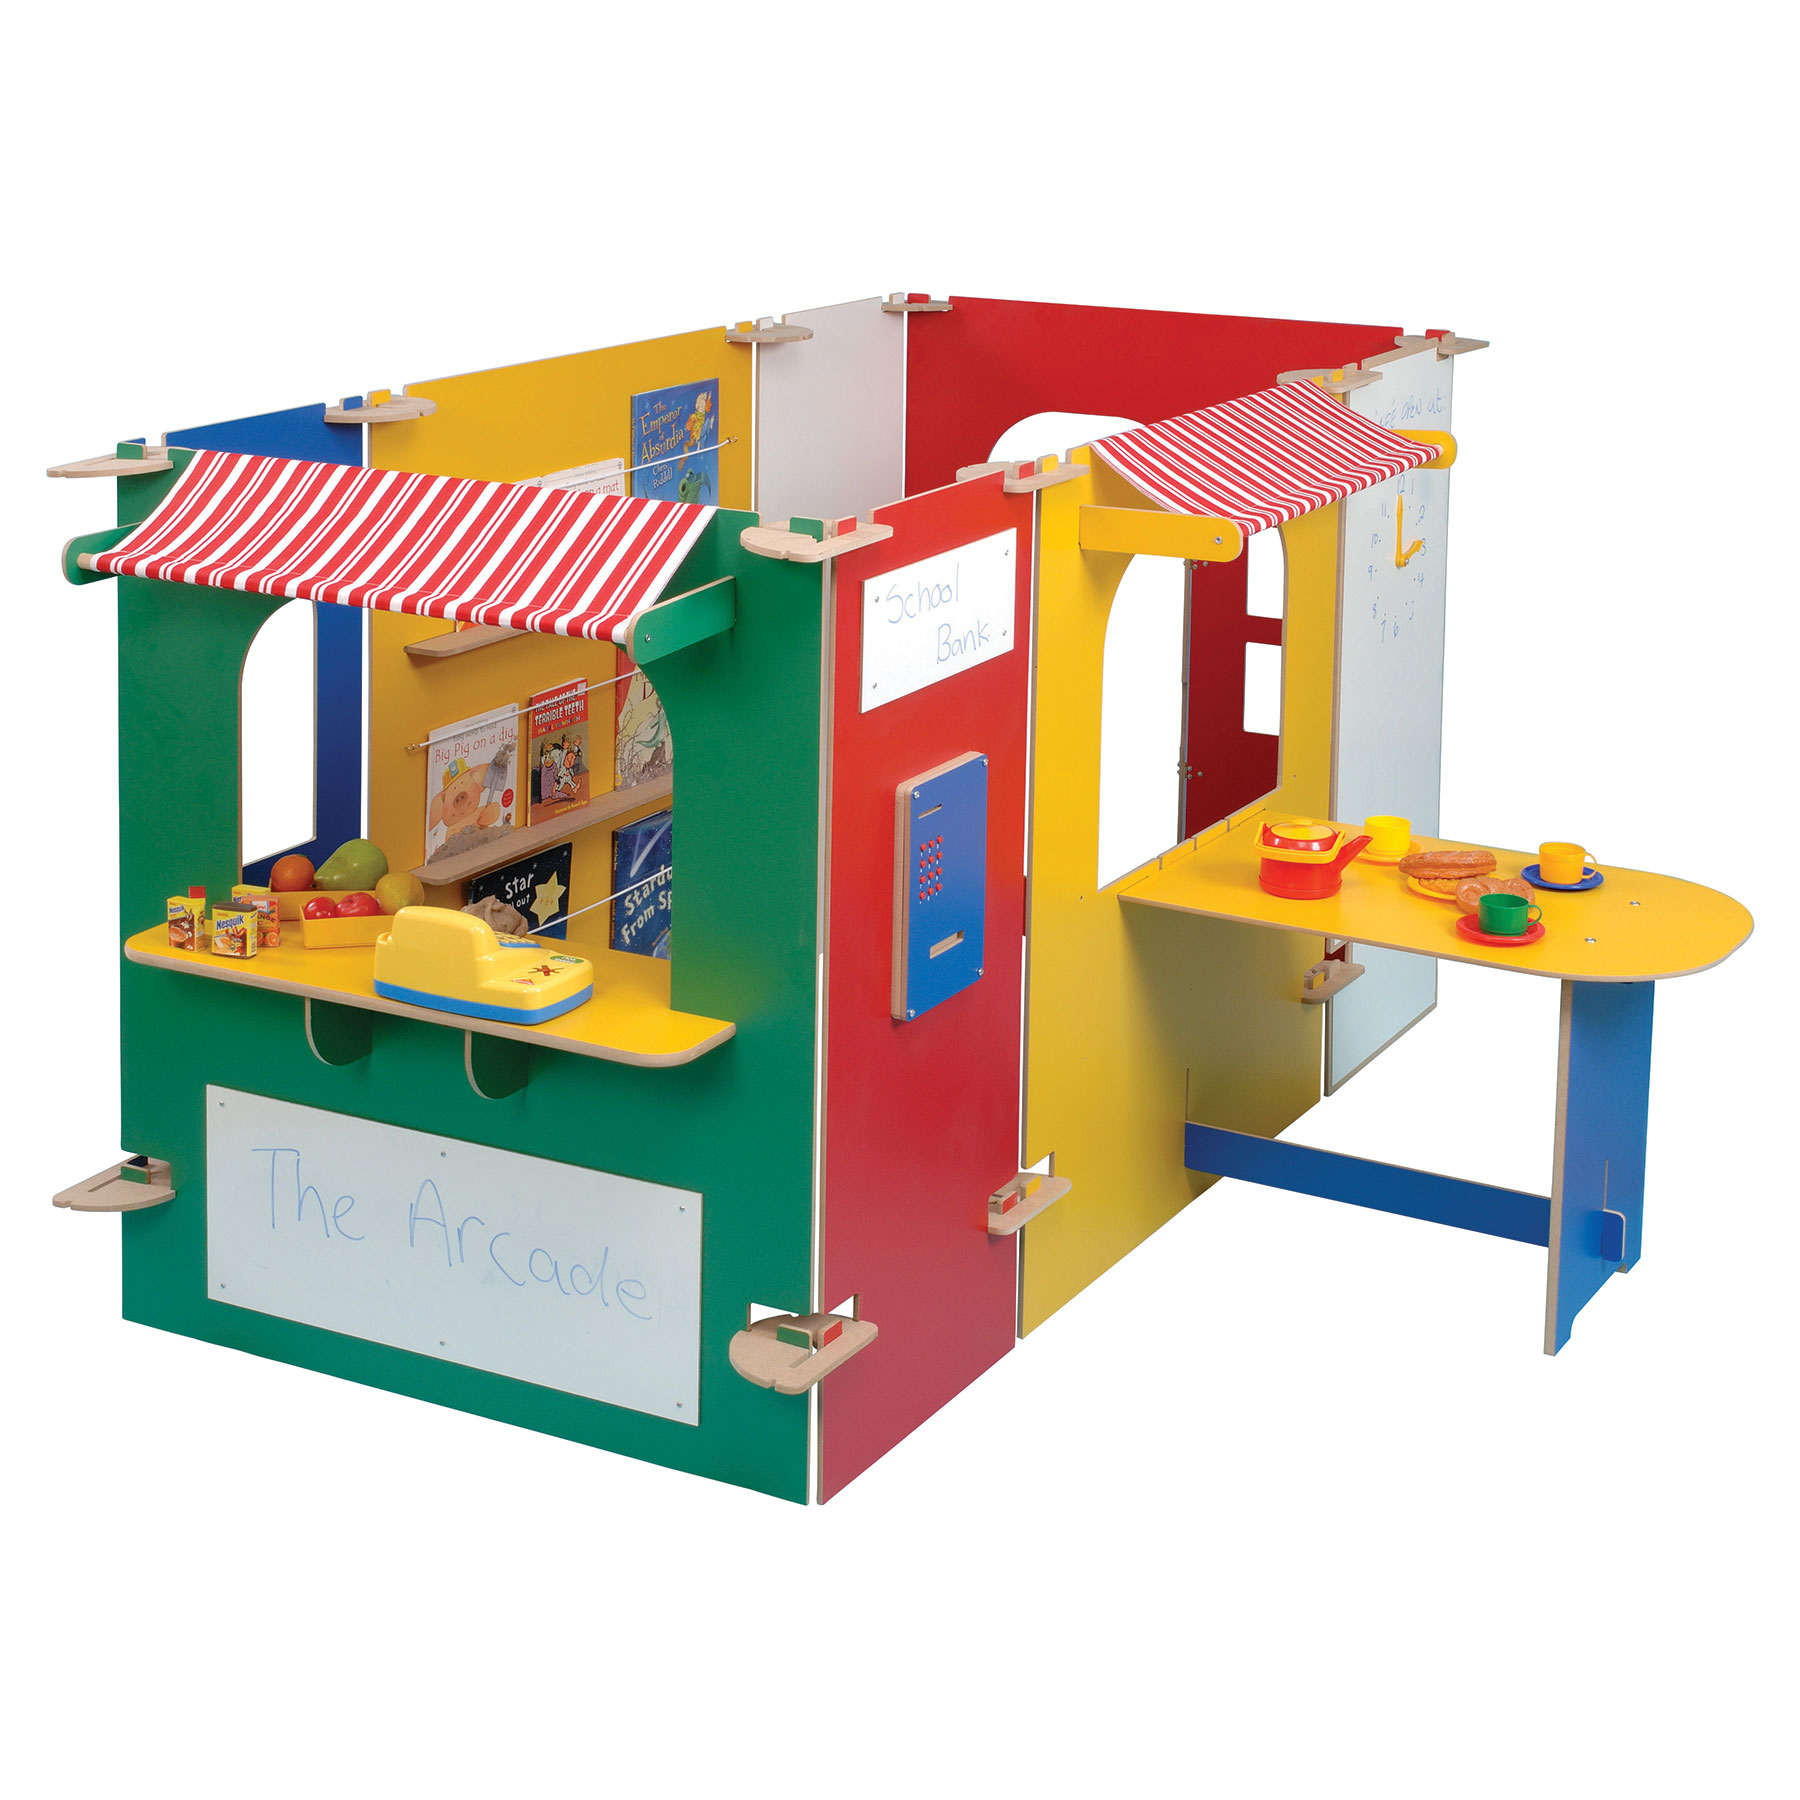 Children's Play Shopping Arcade - Multi-Colour